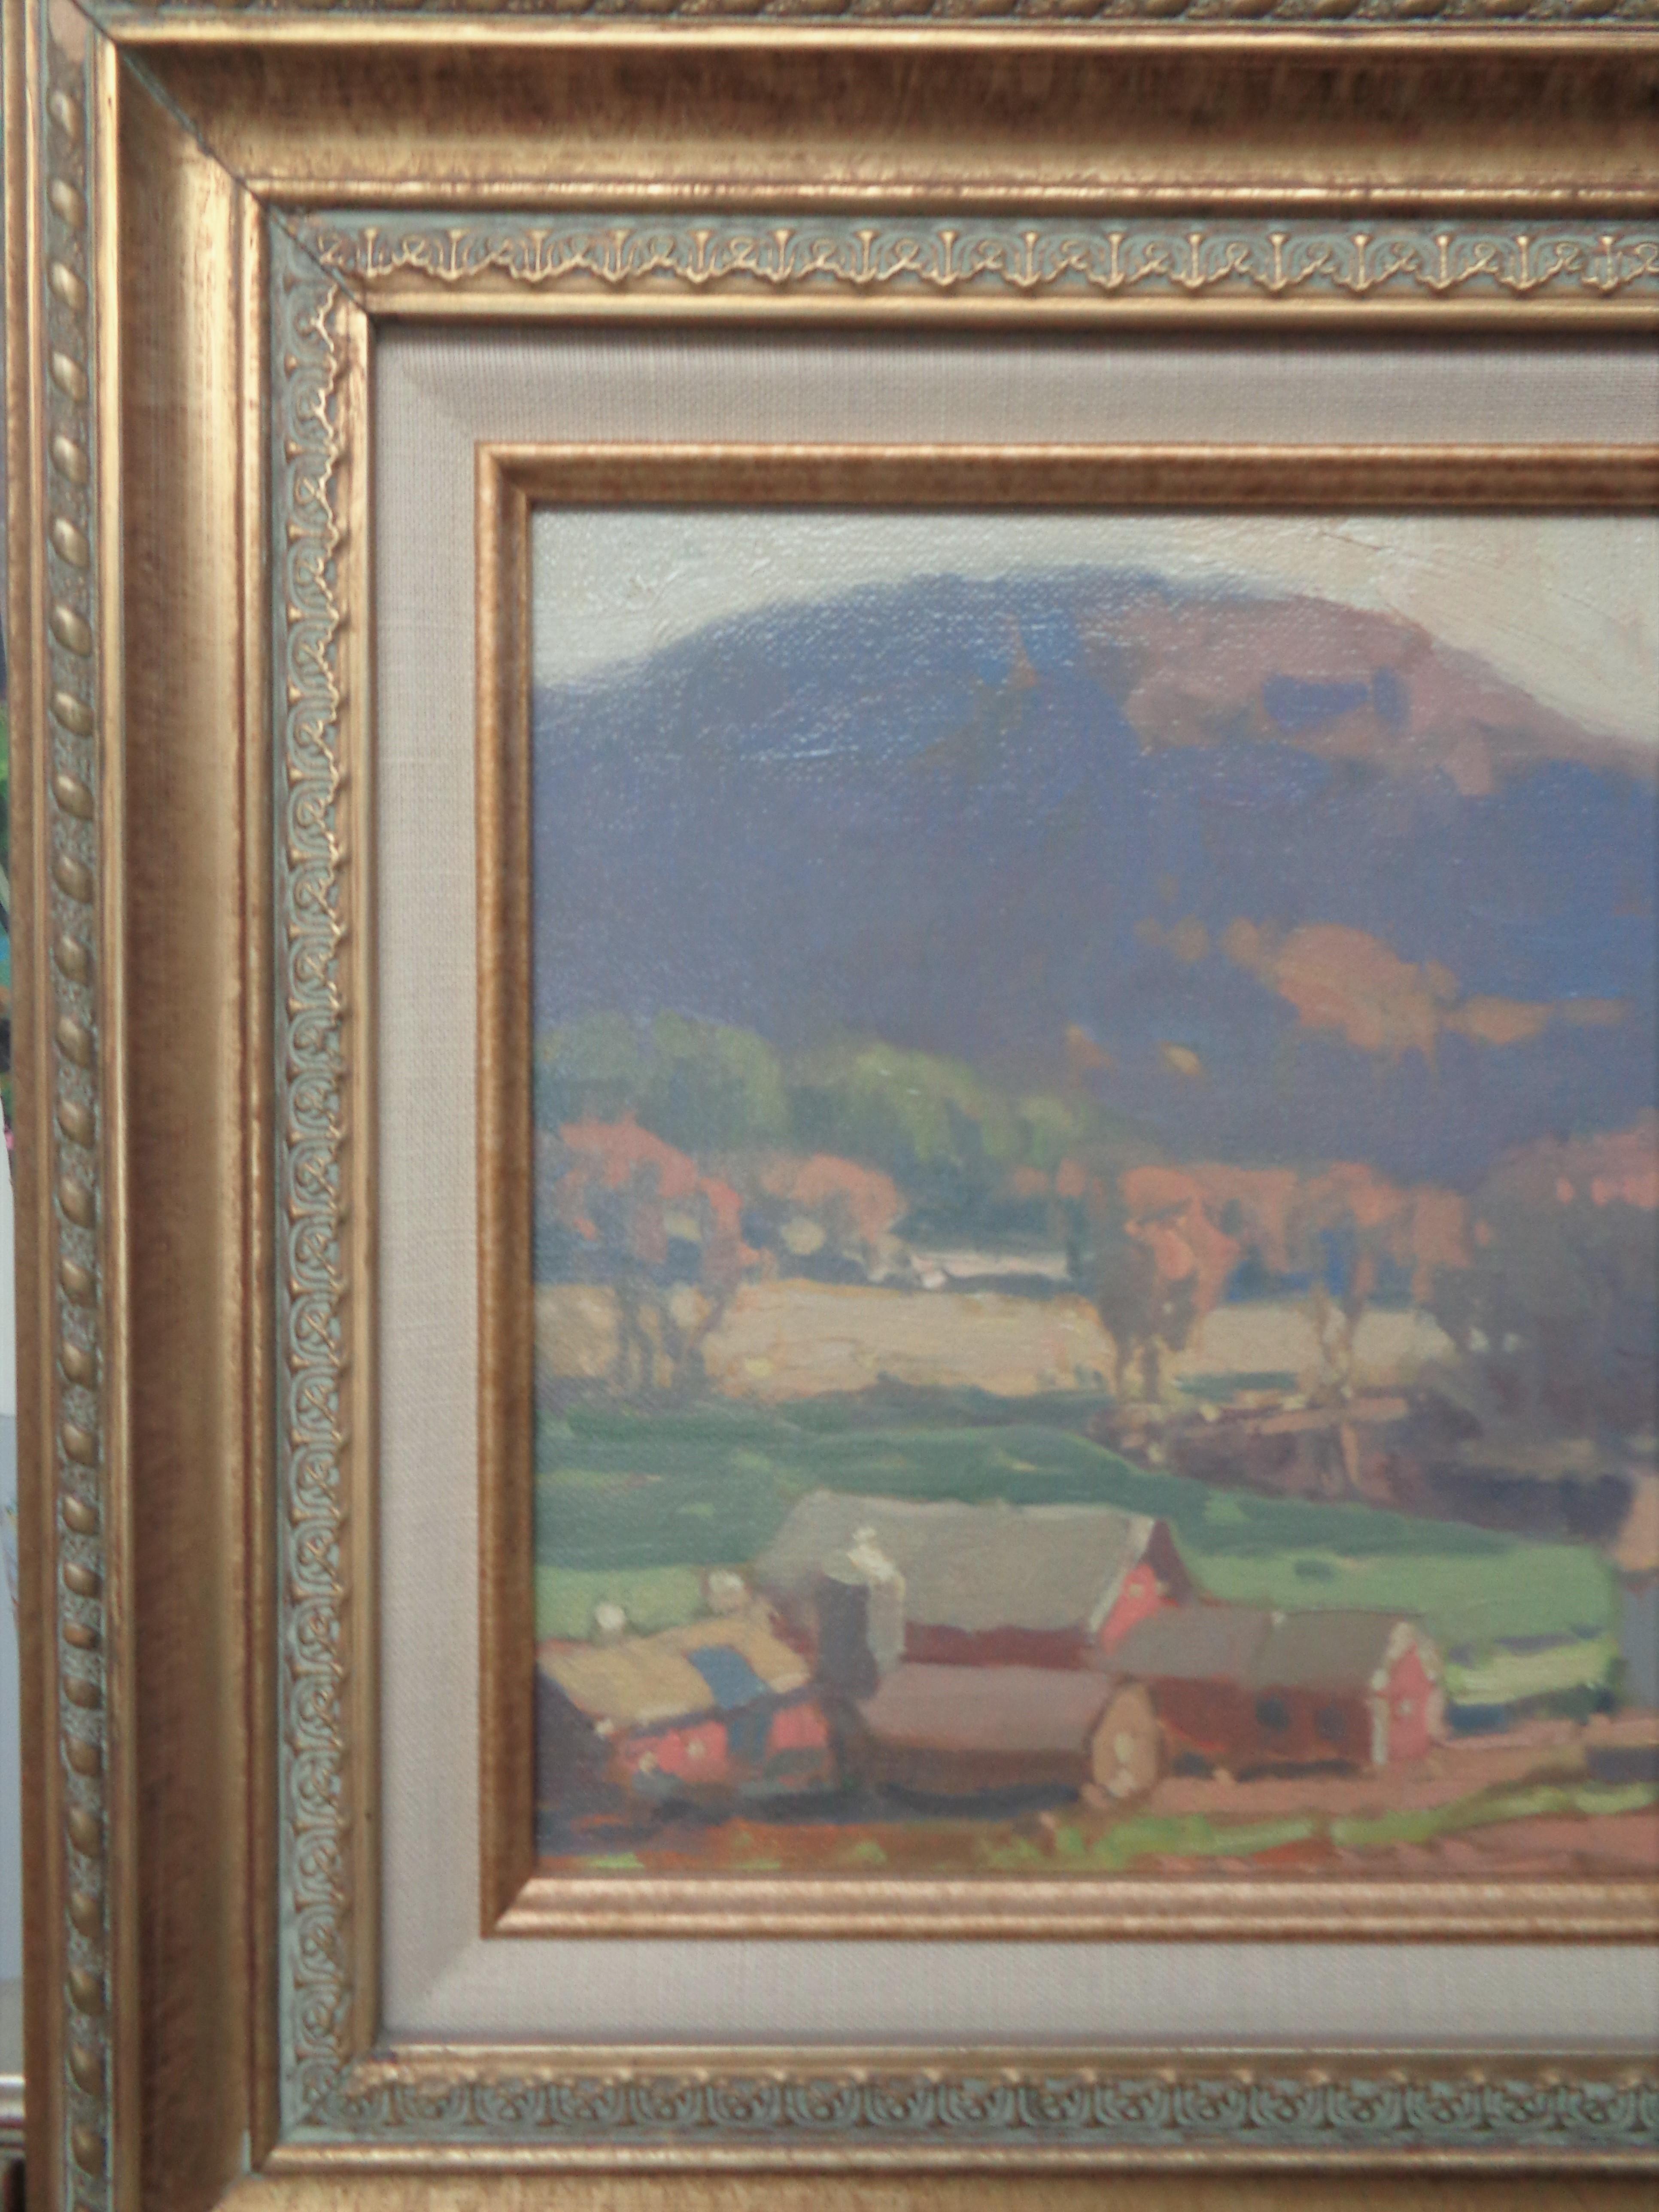 Landscape Farm Oil painting John C Traynor Salmagundi Club Auction NYC For Sale 1